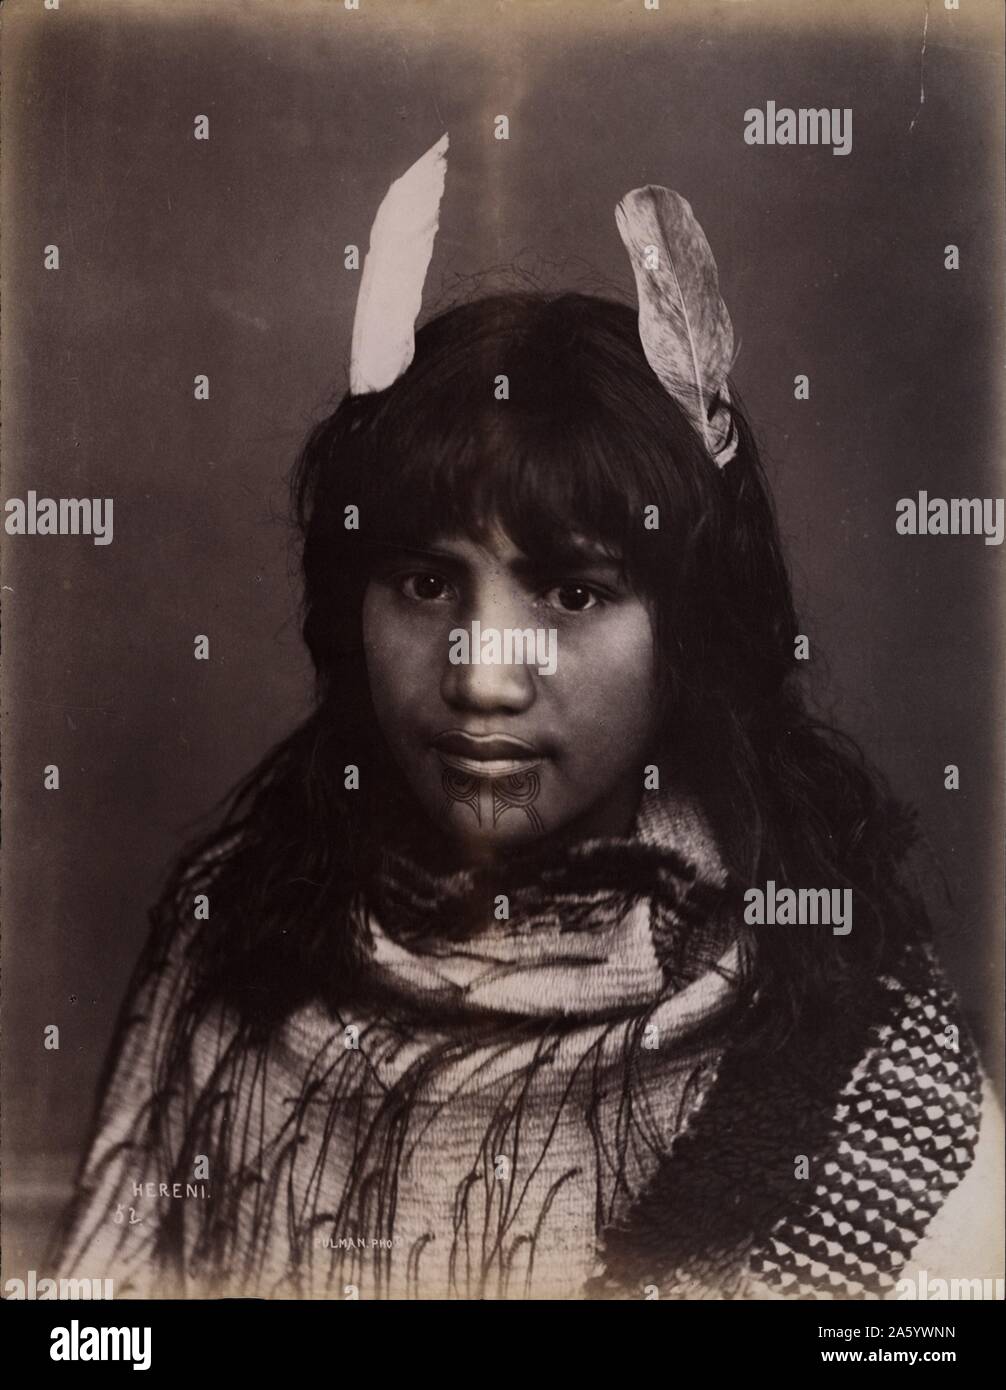 Hereni (Maoriwith Gesicht Tattoos) Photograophed New Zealand 1883 Stockfoto